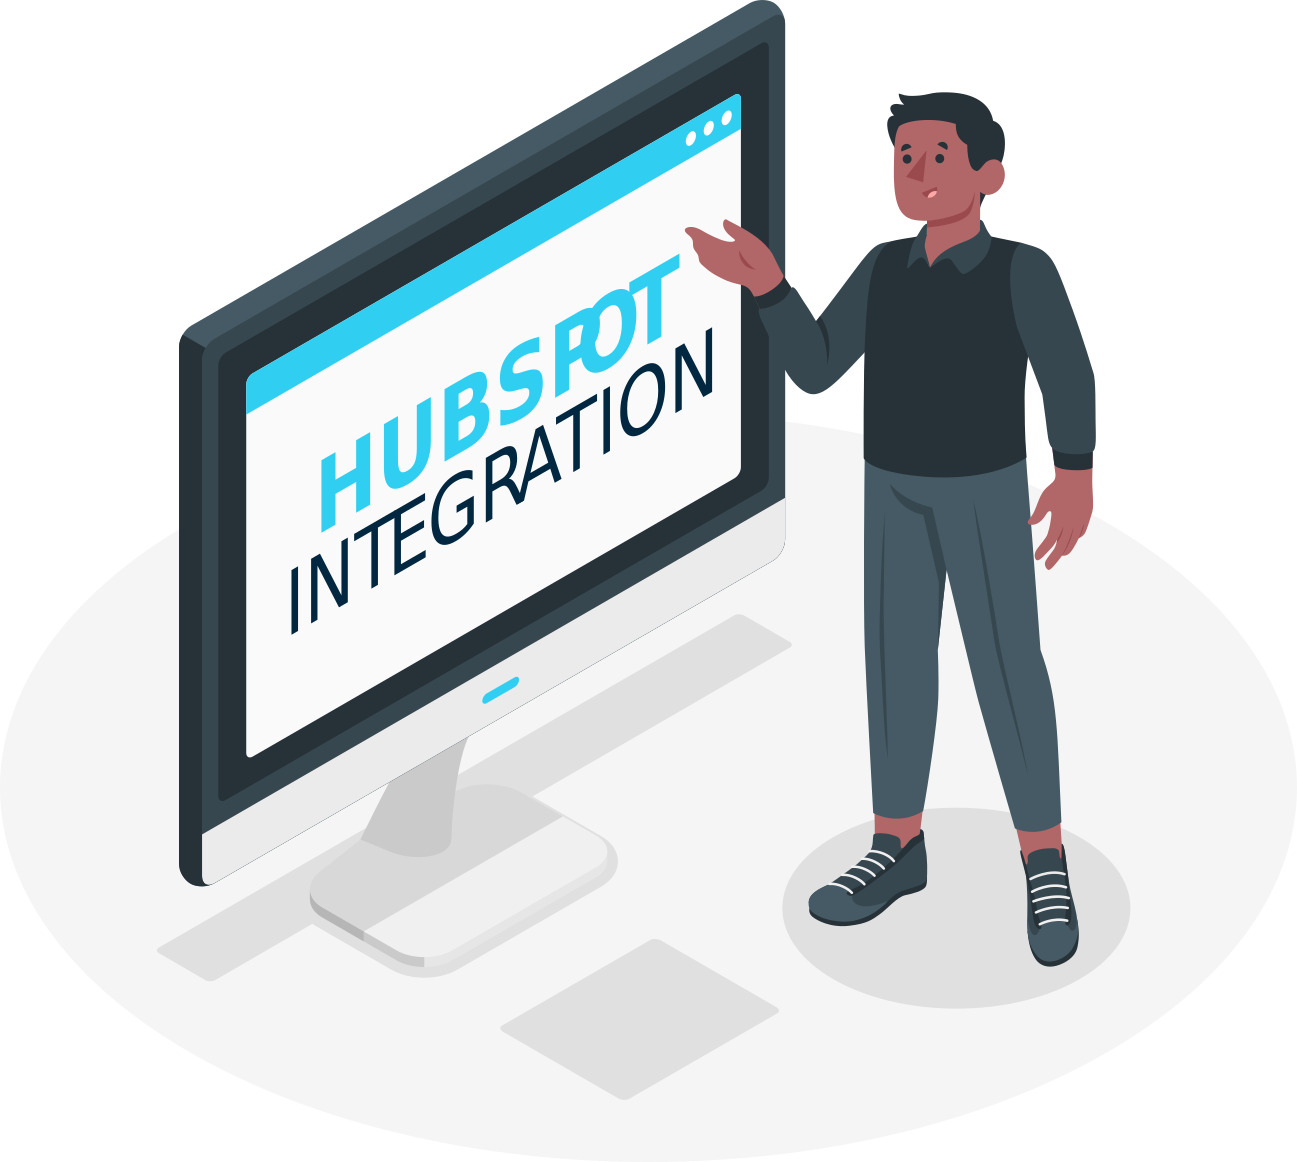 HubSpot Integrations